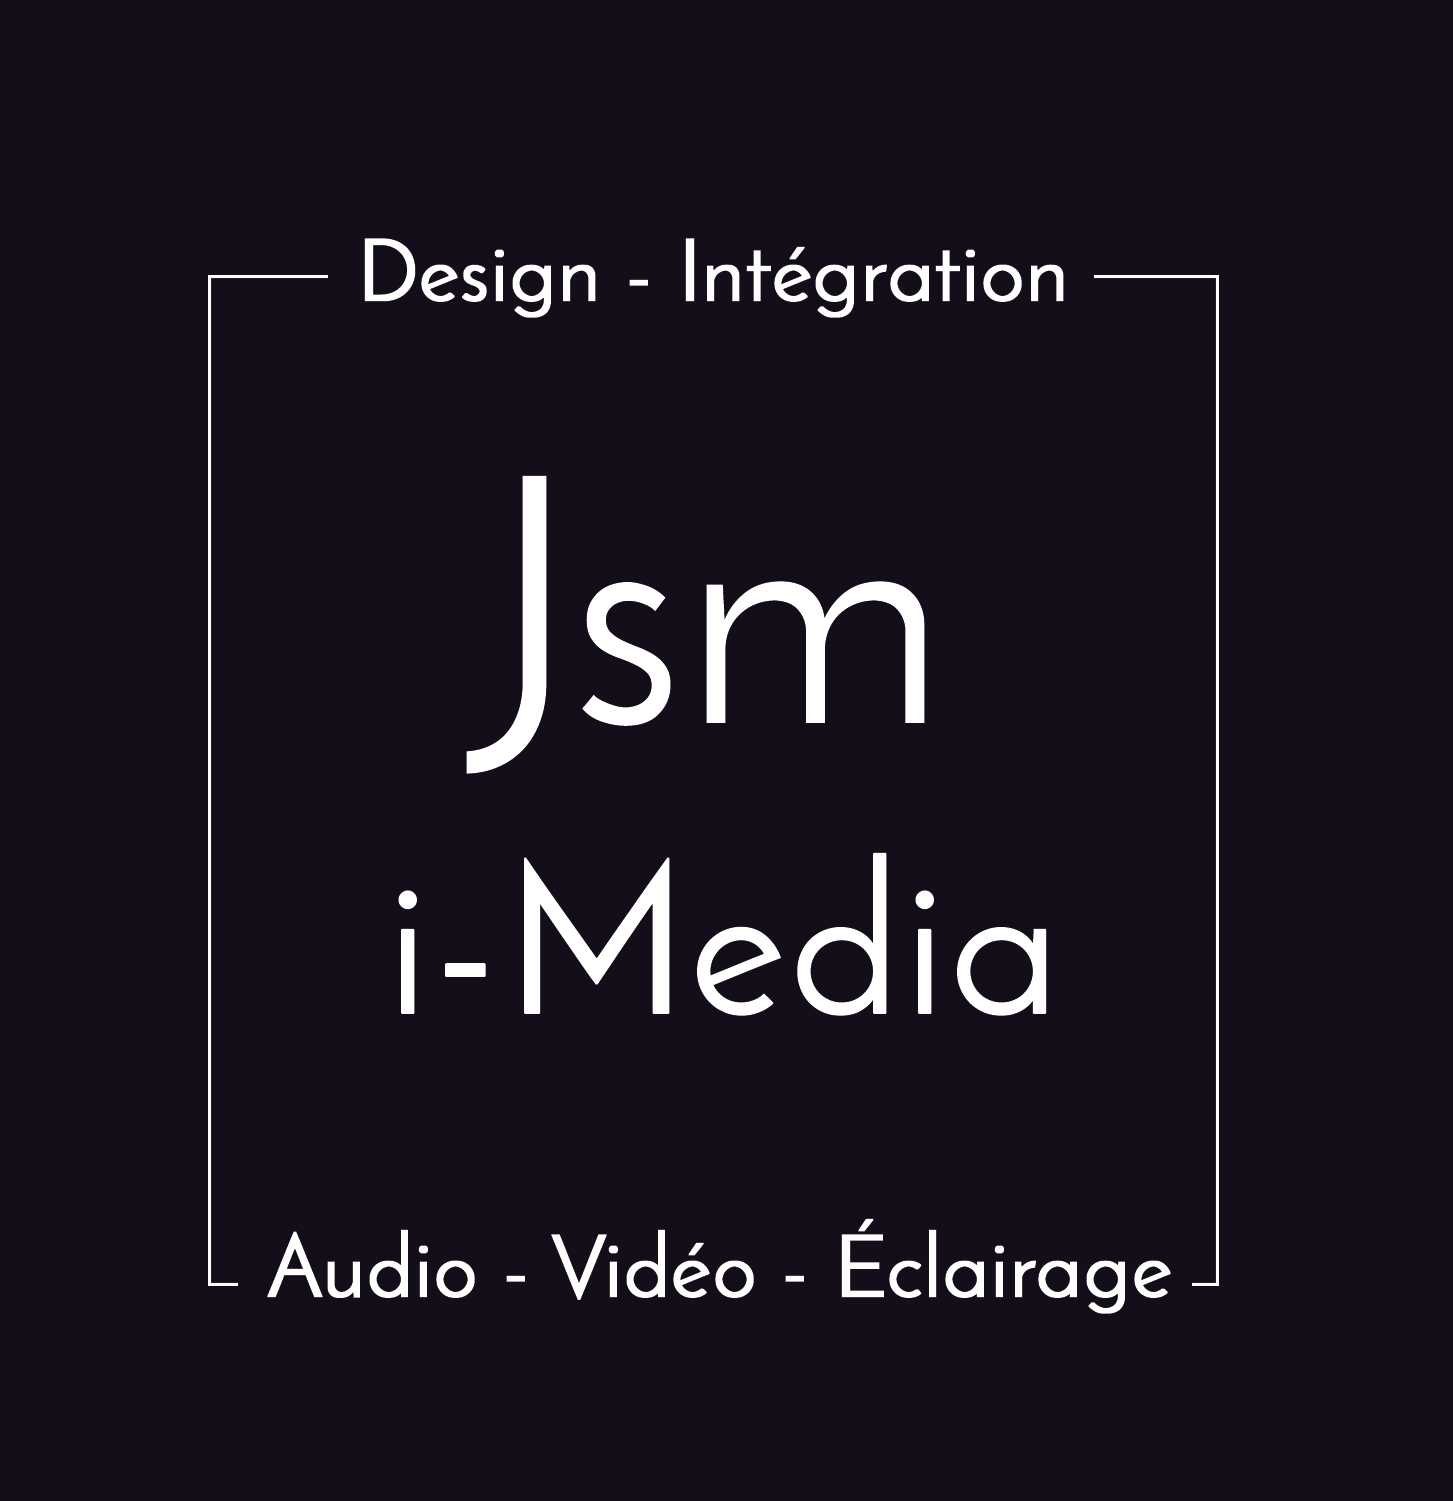 Jsm i-Media